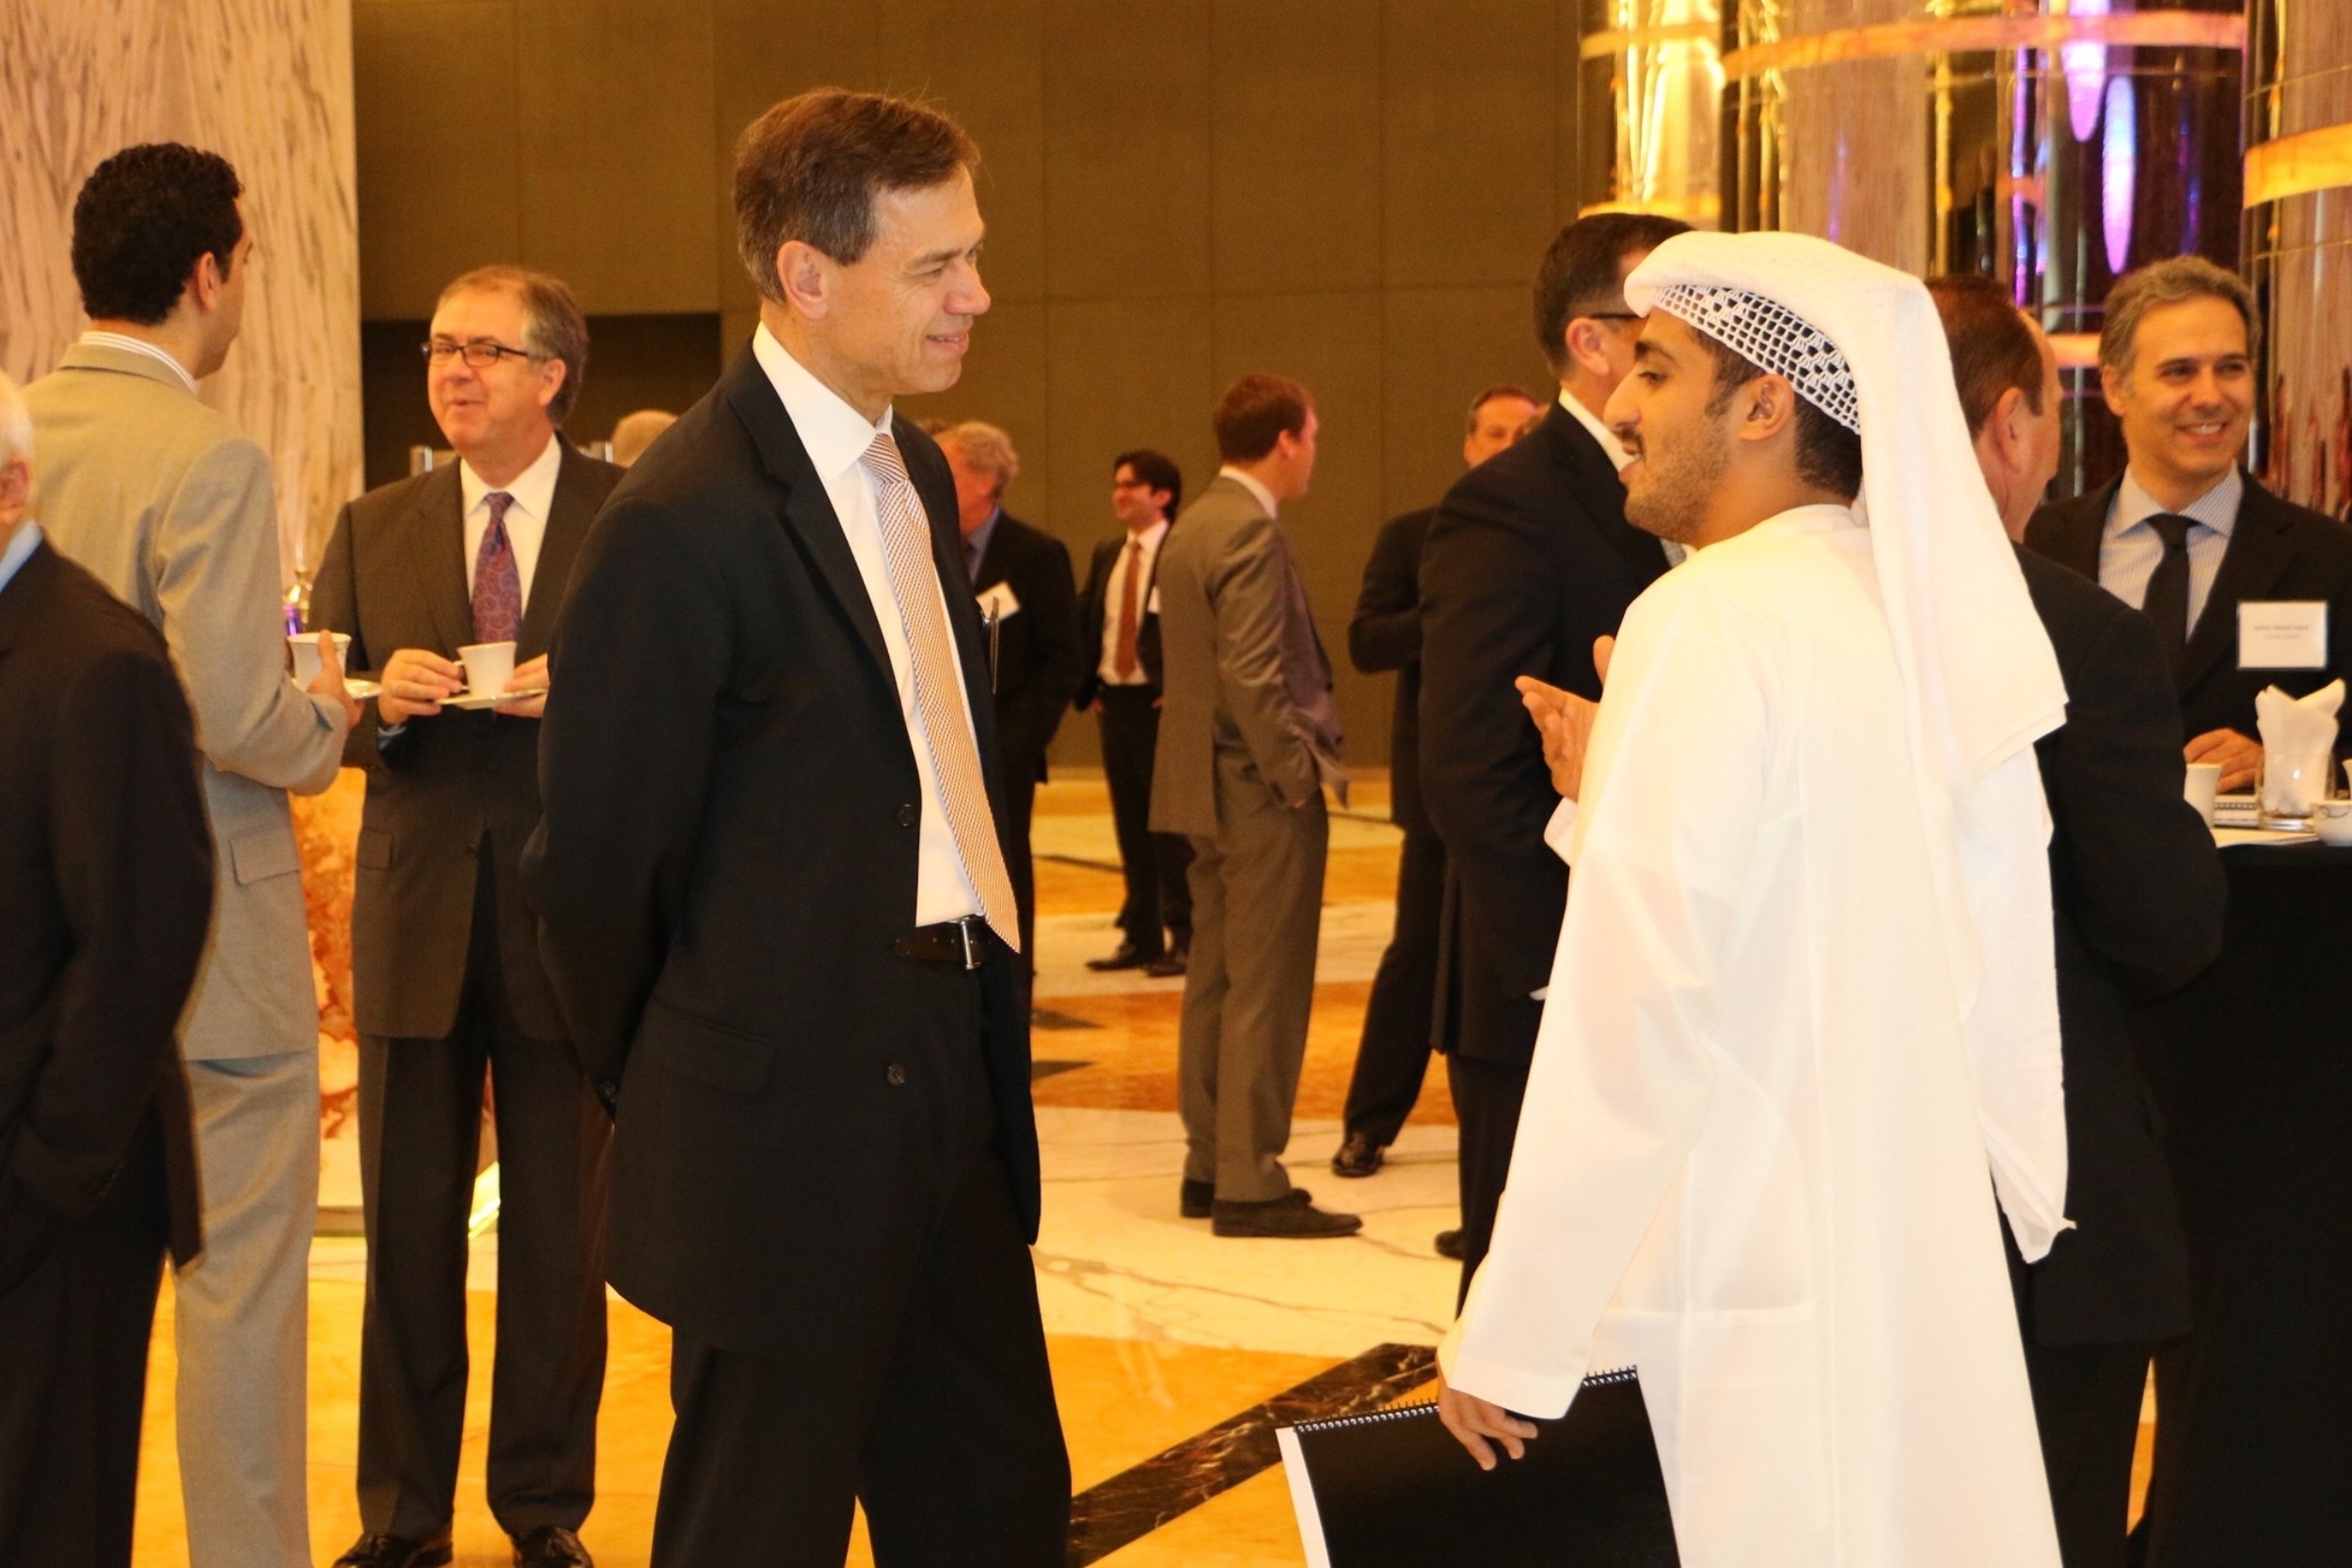 Embassy Staff Mingle & Make Introductions in Abu Dhabi